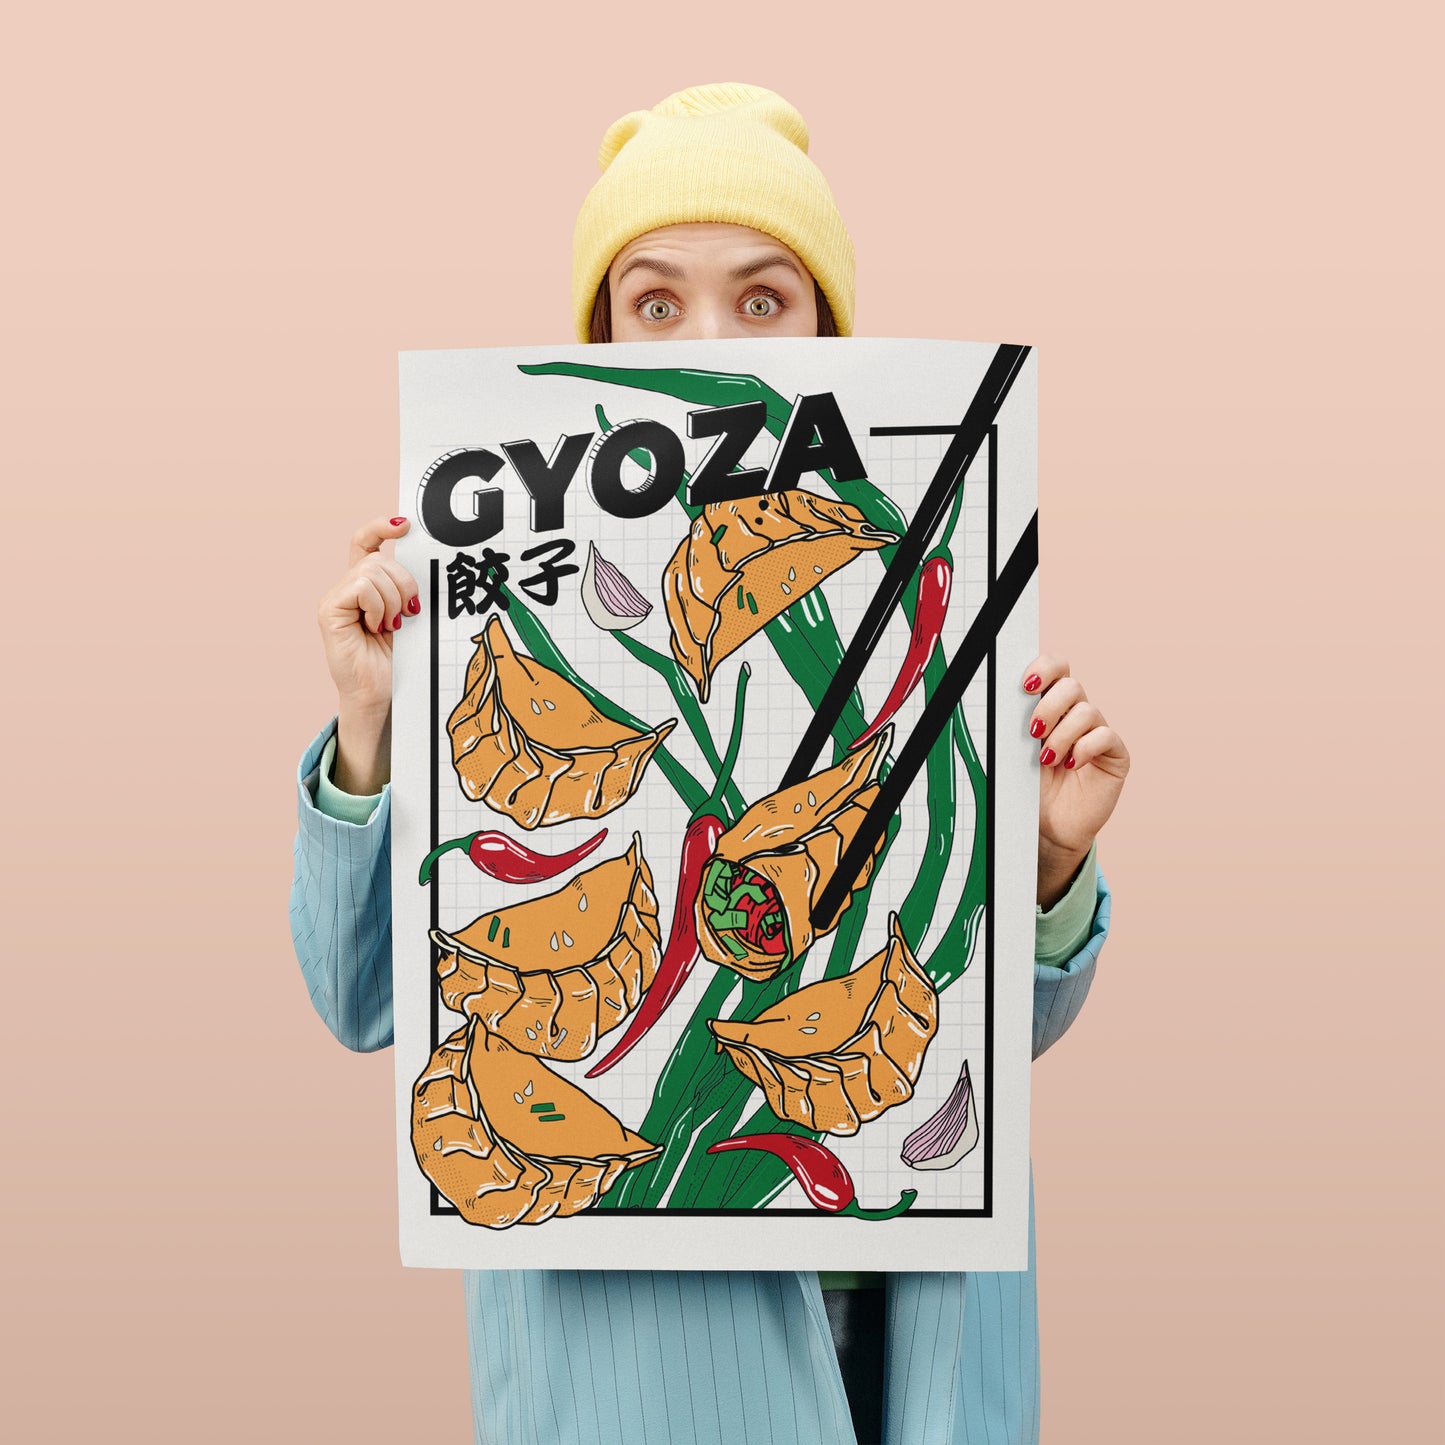 Gyoza Dumplings Poster - Japanese Food Art